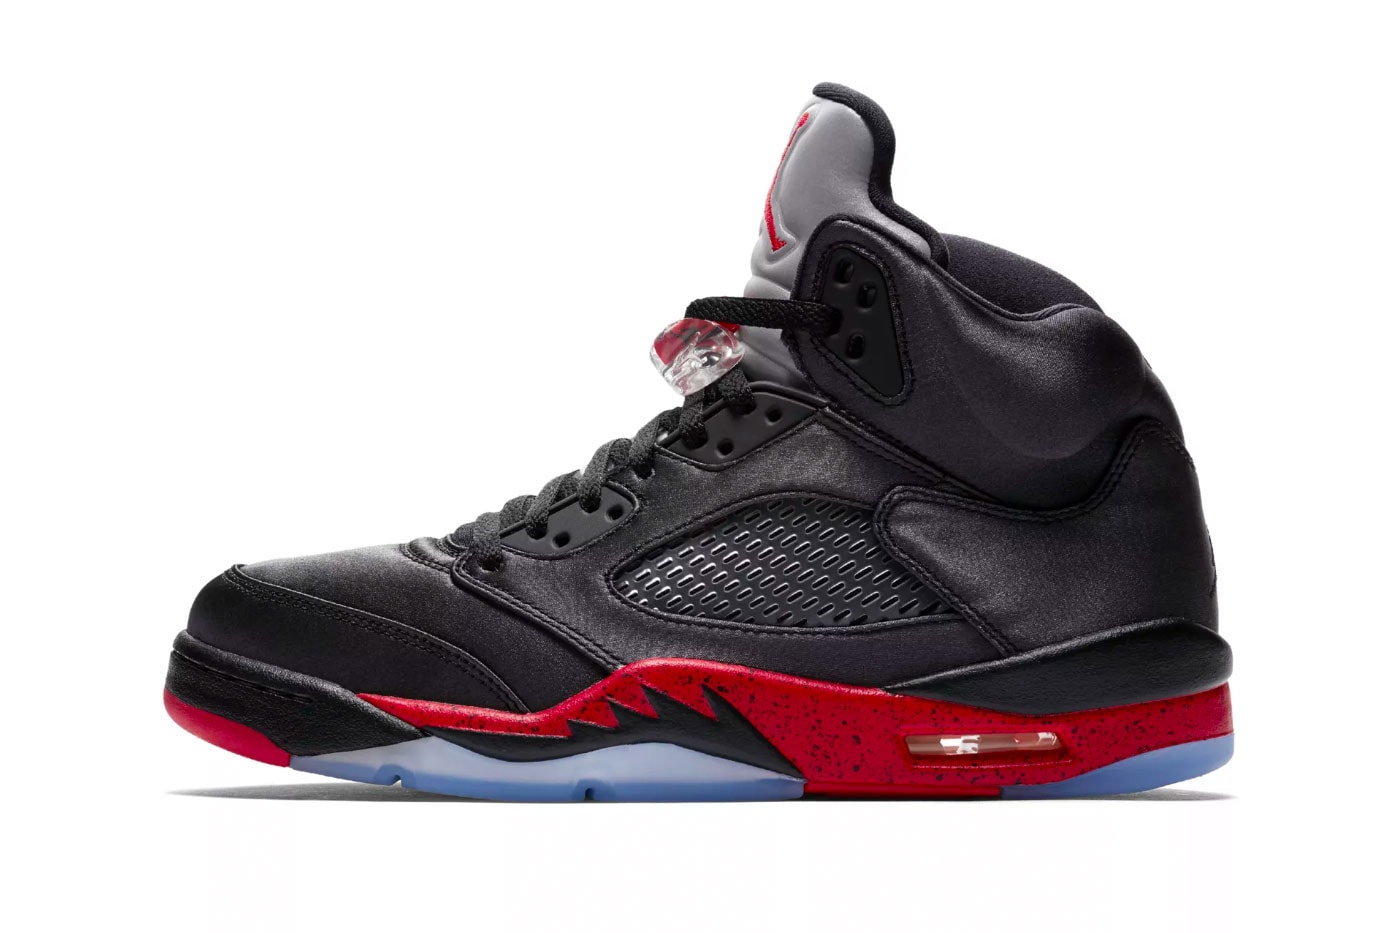 Air Jordan 5 bred "Black/University Red" Release Date info price sneaker colorway november 3 jordan brand nike